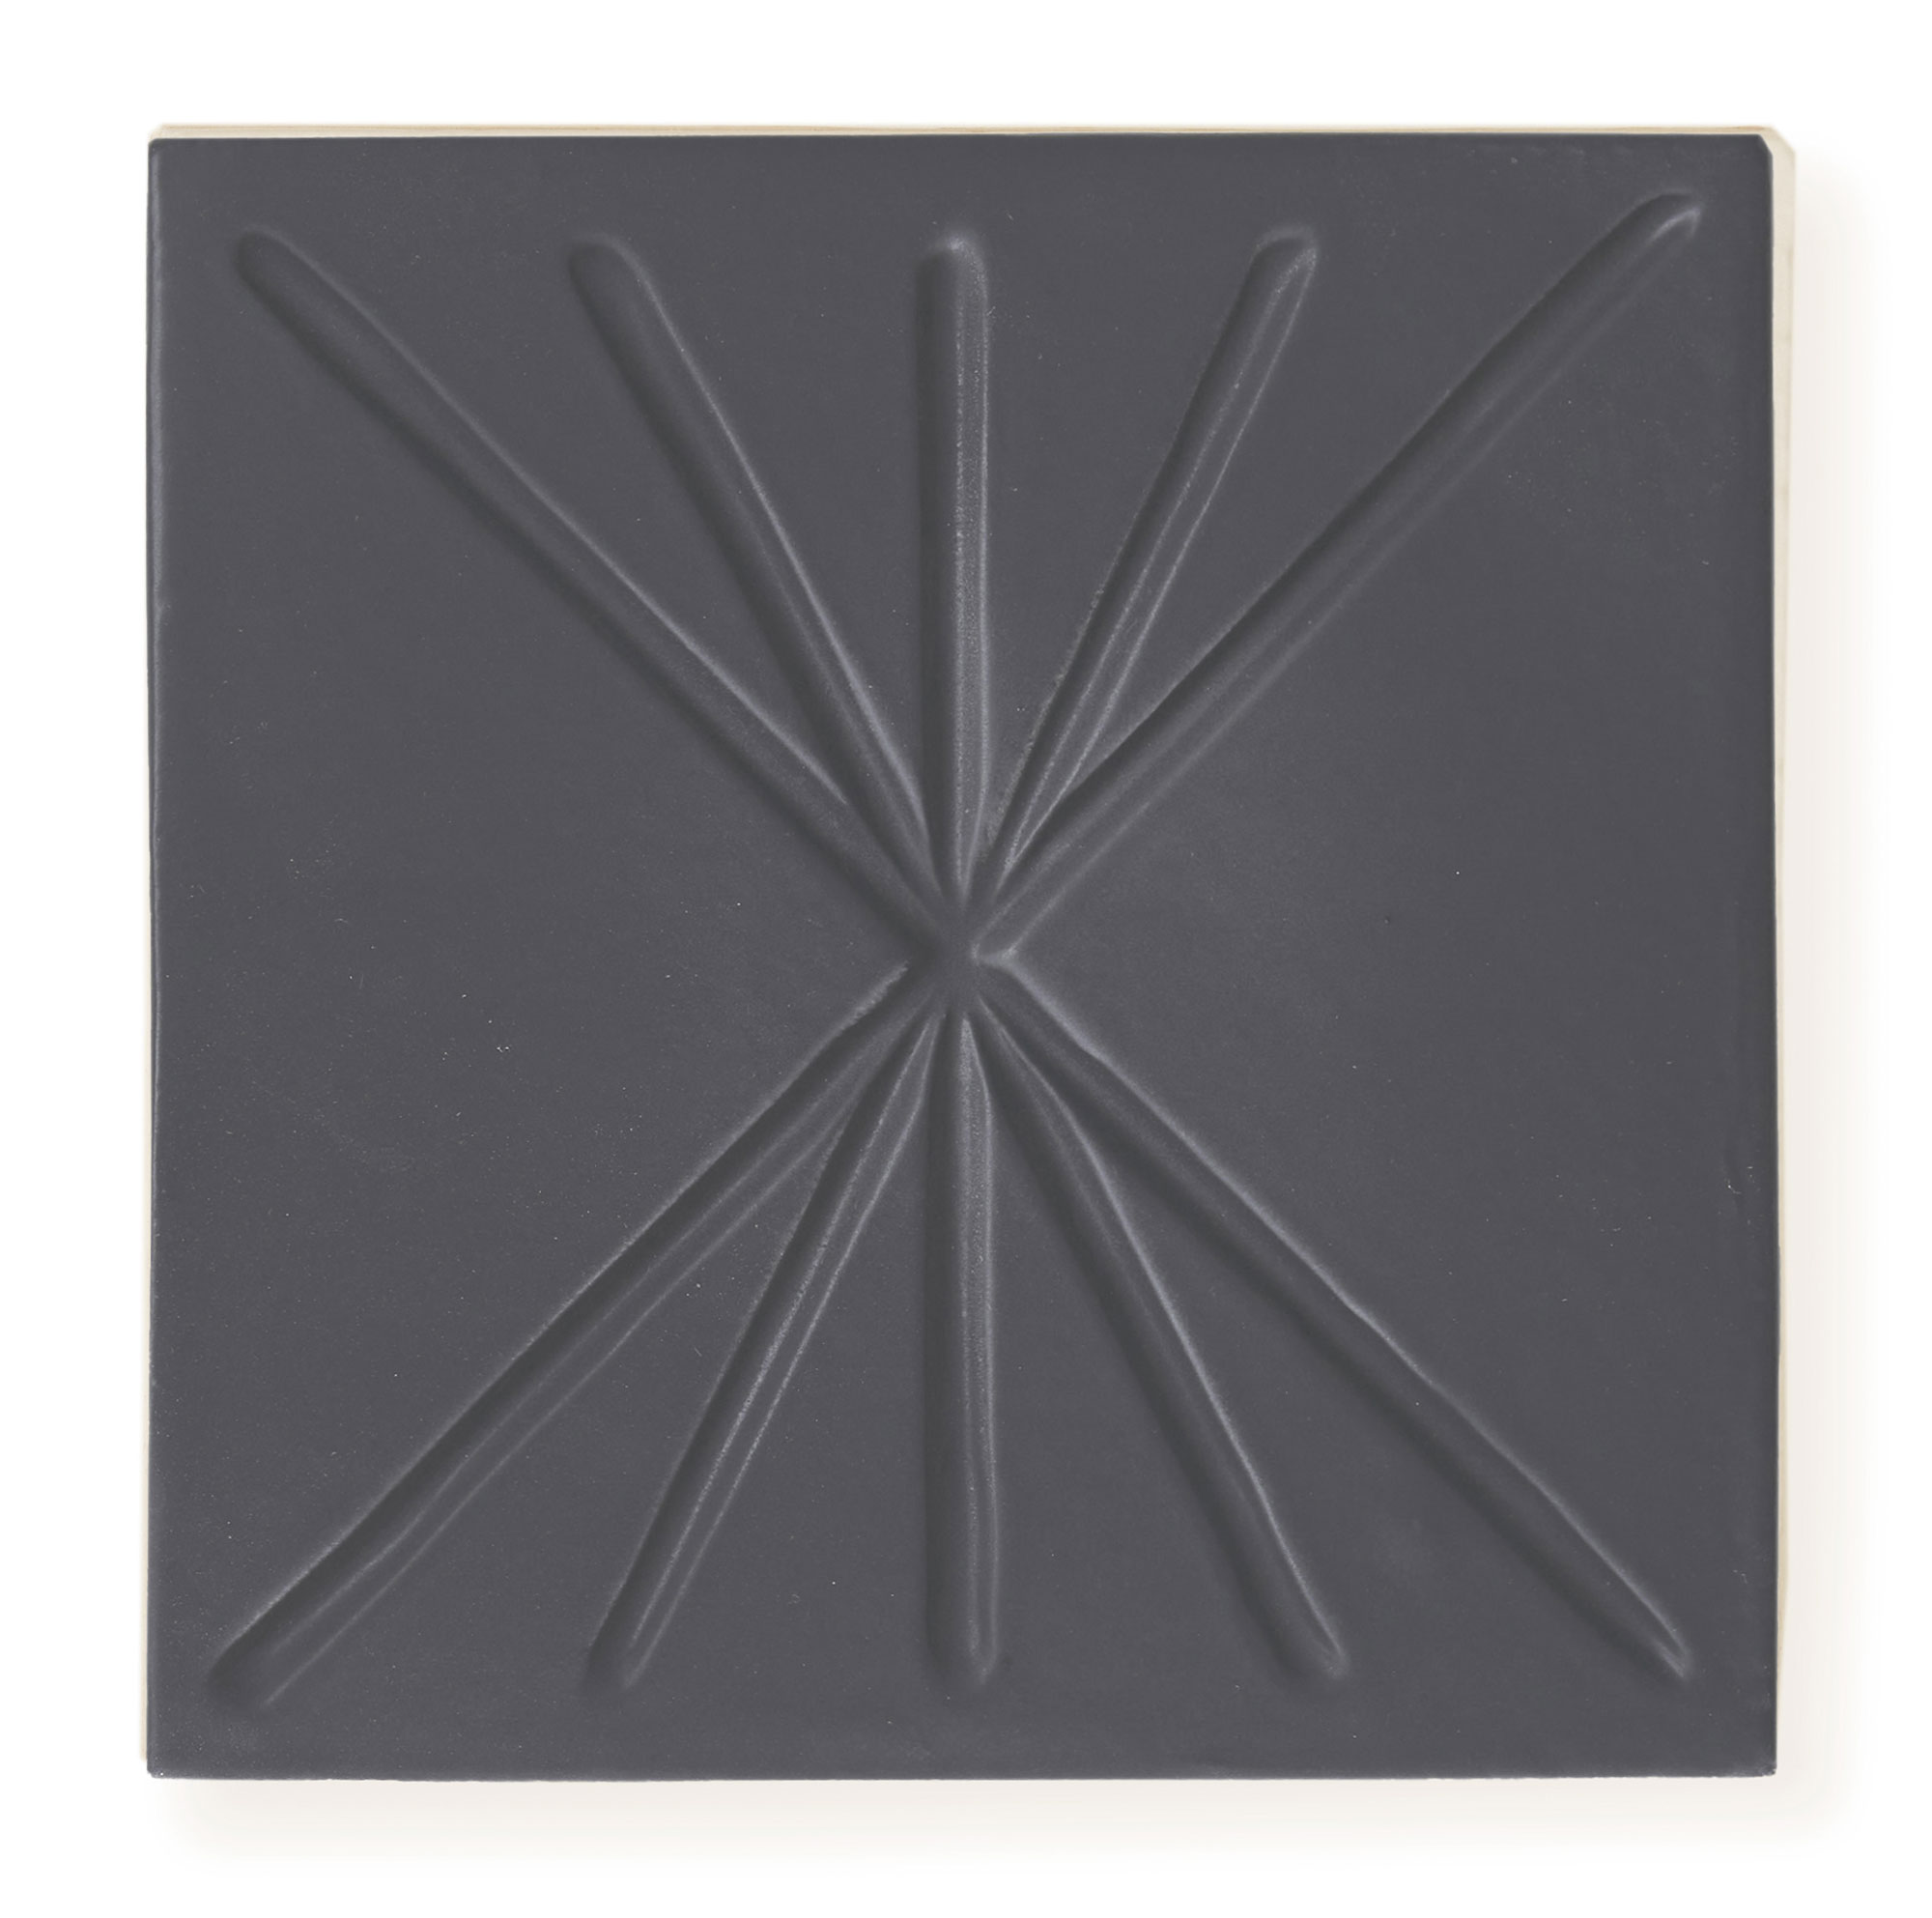 Tepoz Black 6x6 - Dimensional Relief Artisan Ceramic Tile